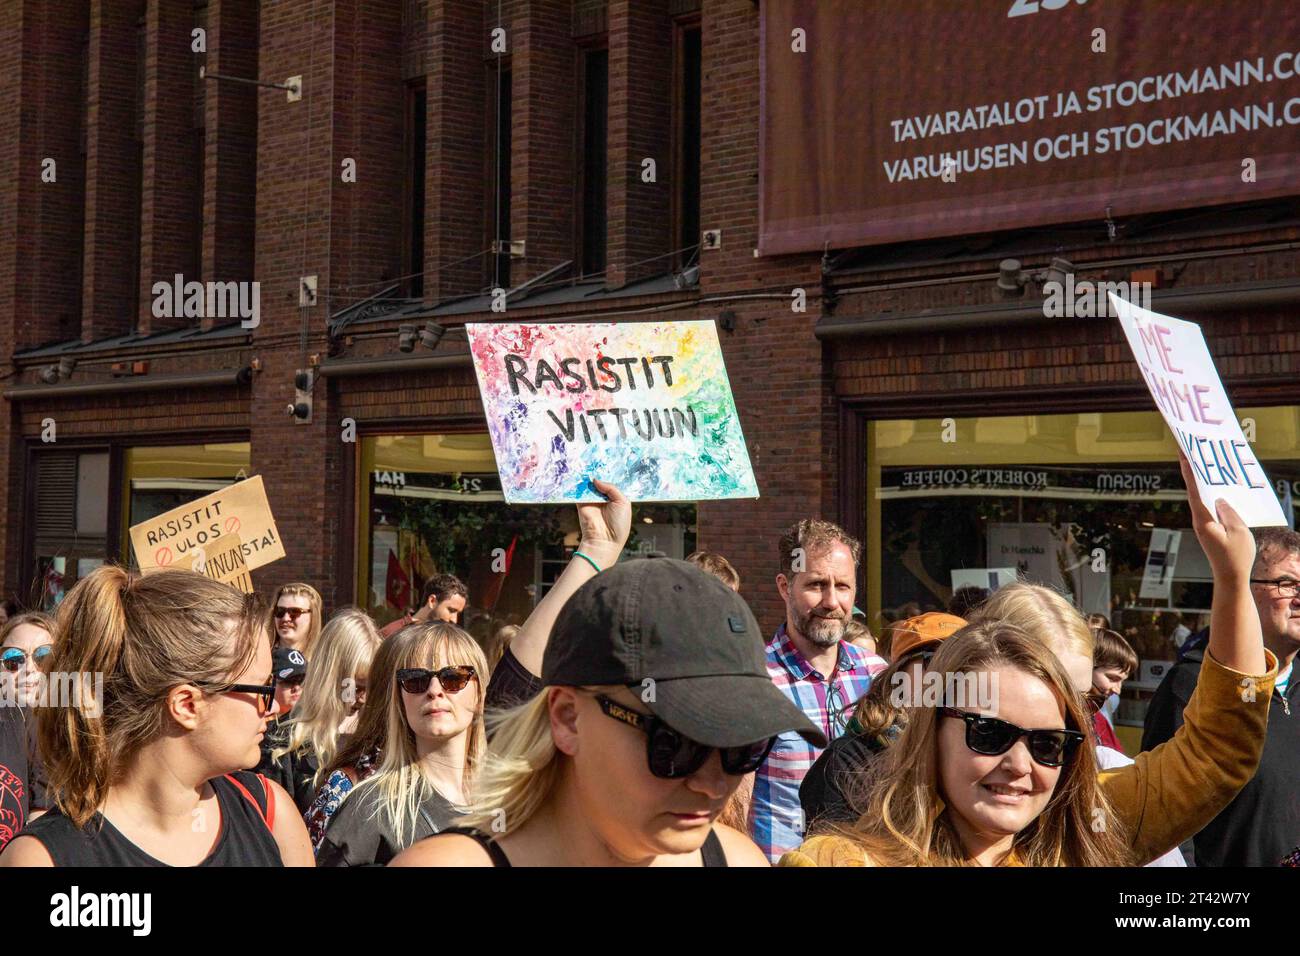 Rasistit vittuun. Buntes, handgemachtes Schild auf mich, emme vaikene! Anti-Rassismus-Demonstration in Helsinki, Finnland. Stockfoto